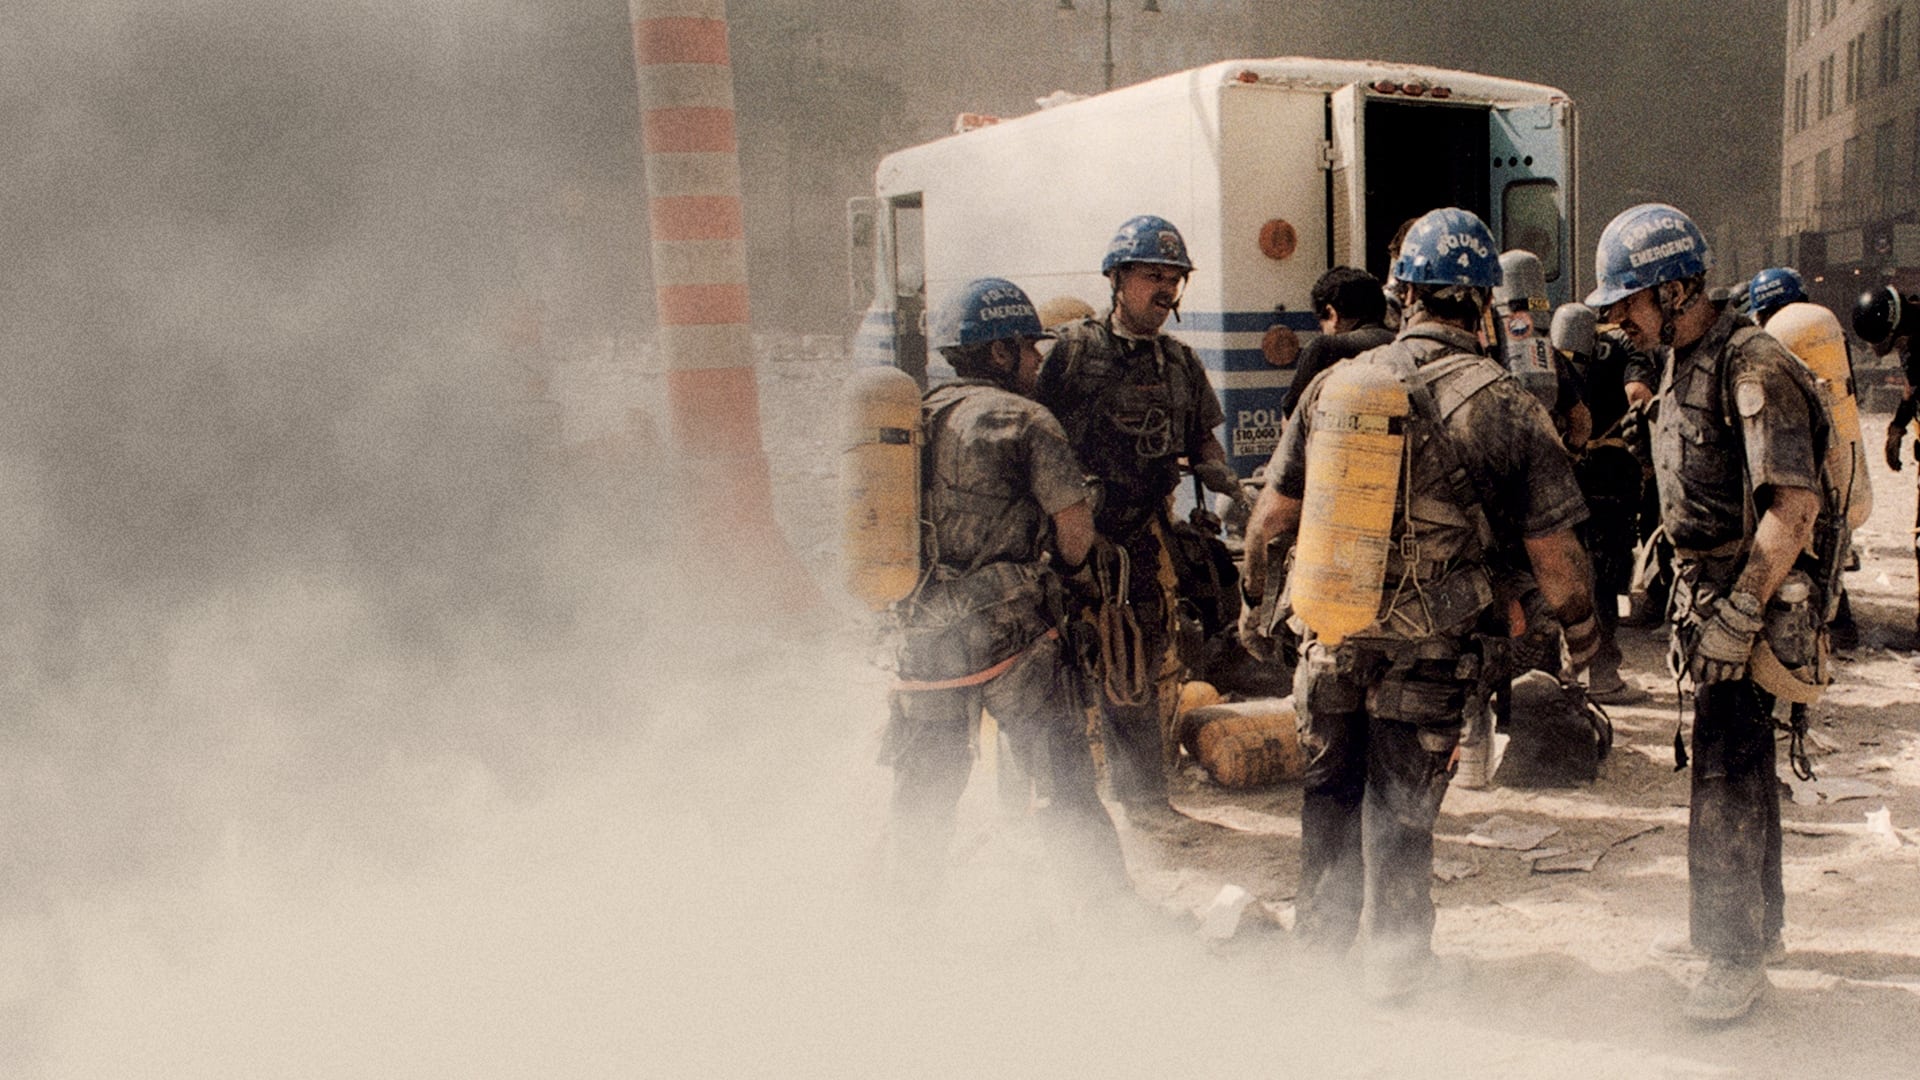 9/11: Rescue Cops (2014)